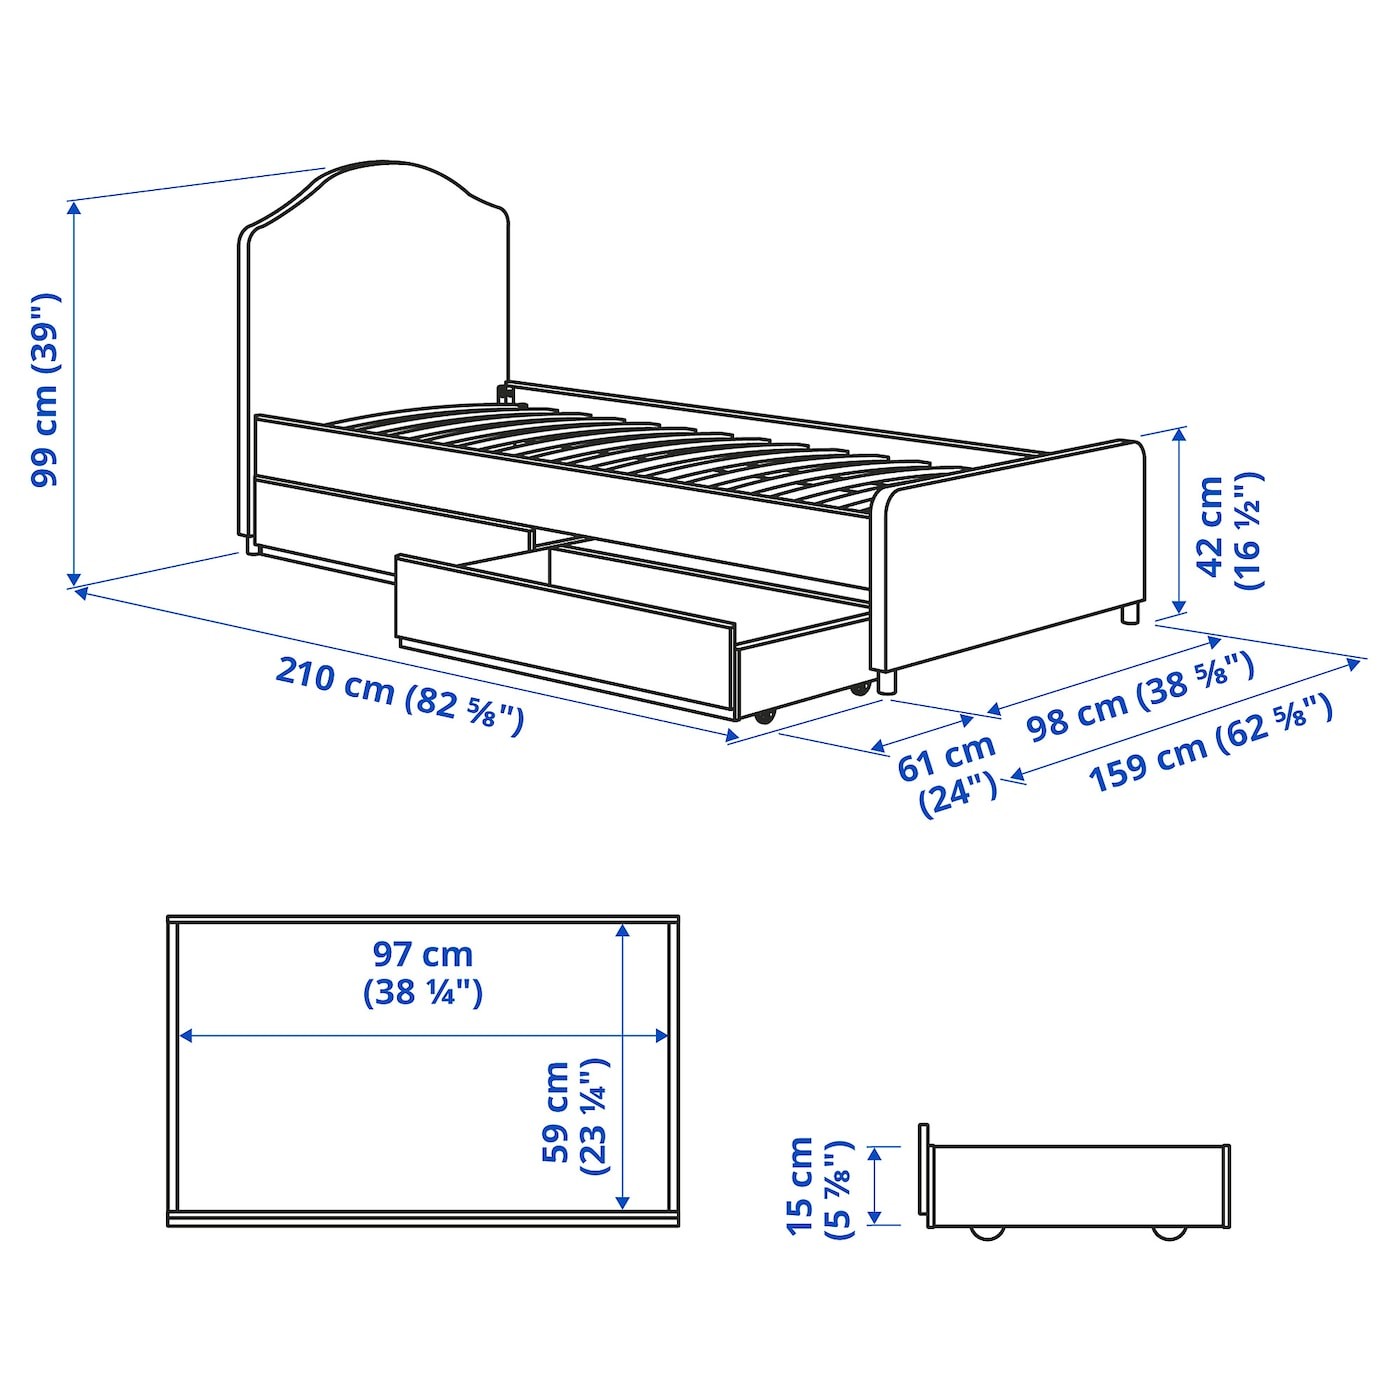 HAUGA Upholstered bed, 2 storage boxes